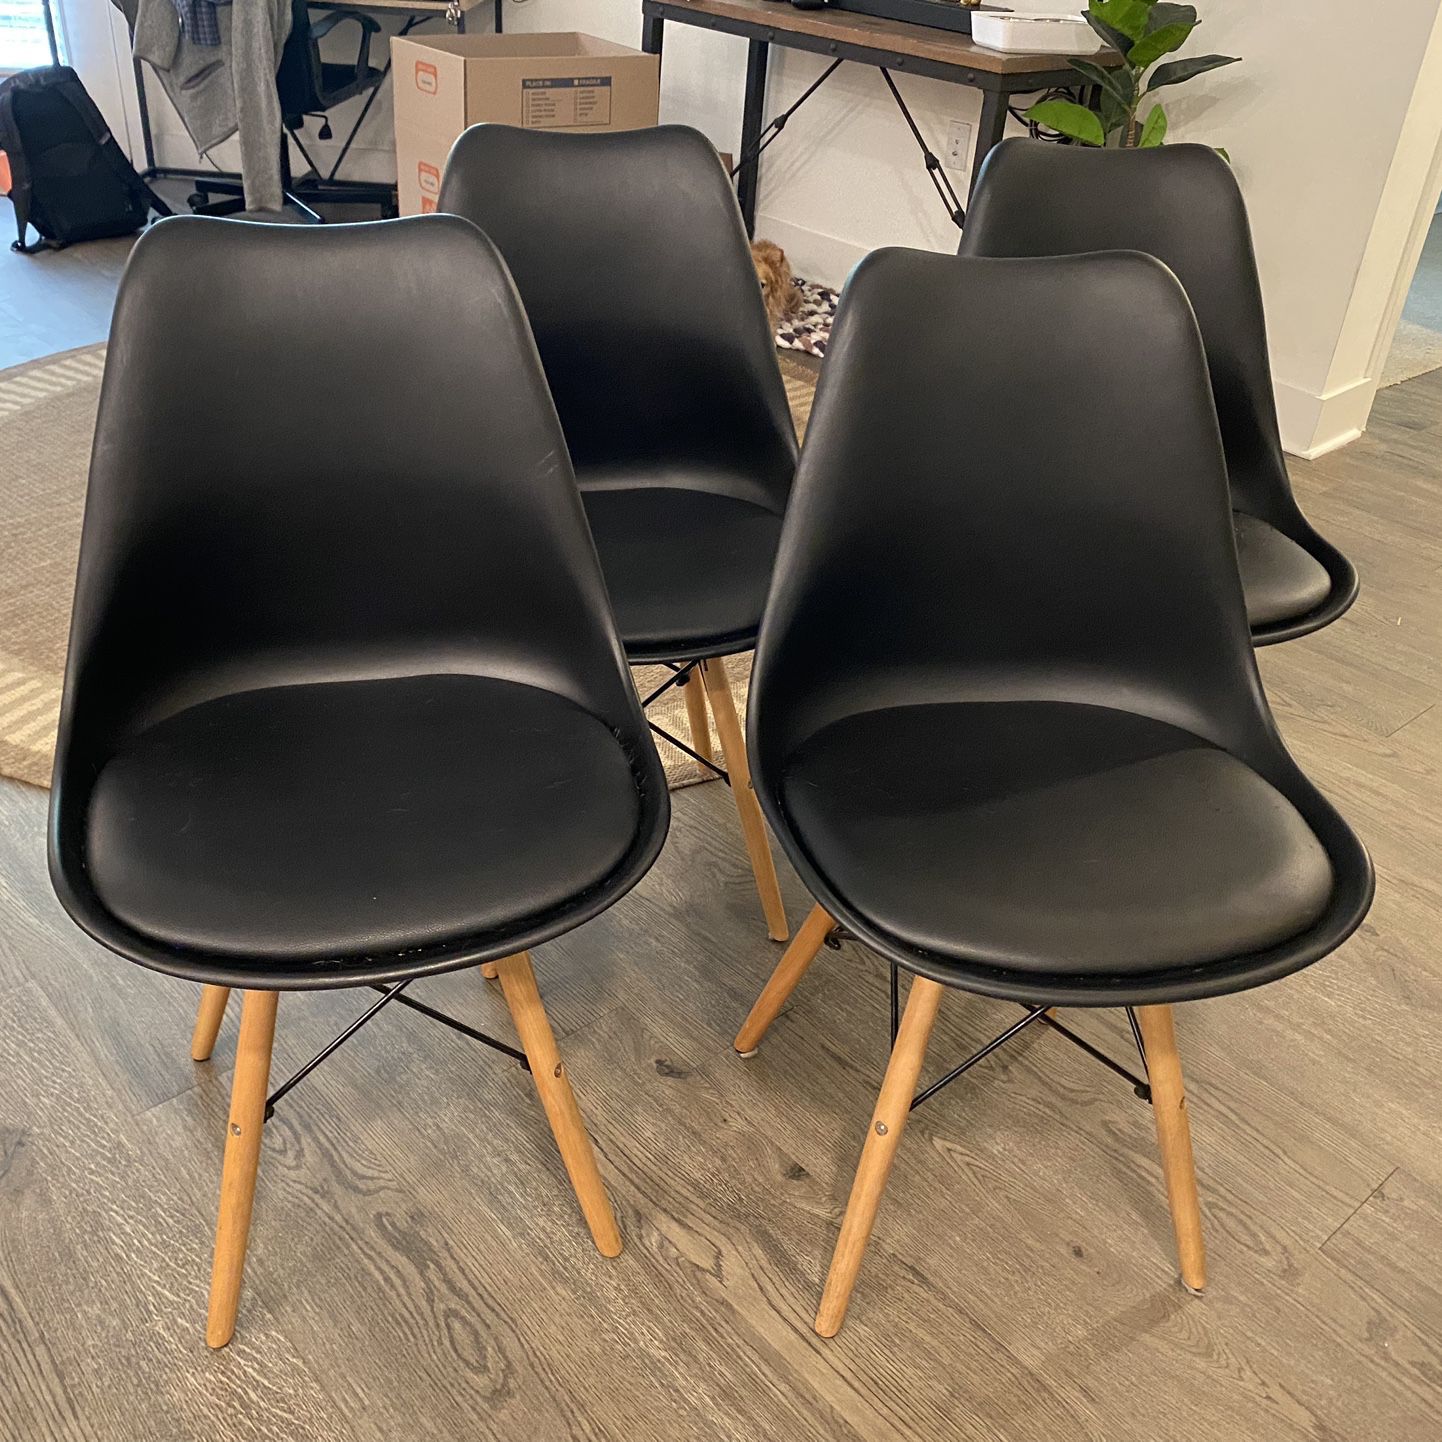 Comfortable Modern Black Chairs 